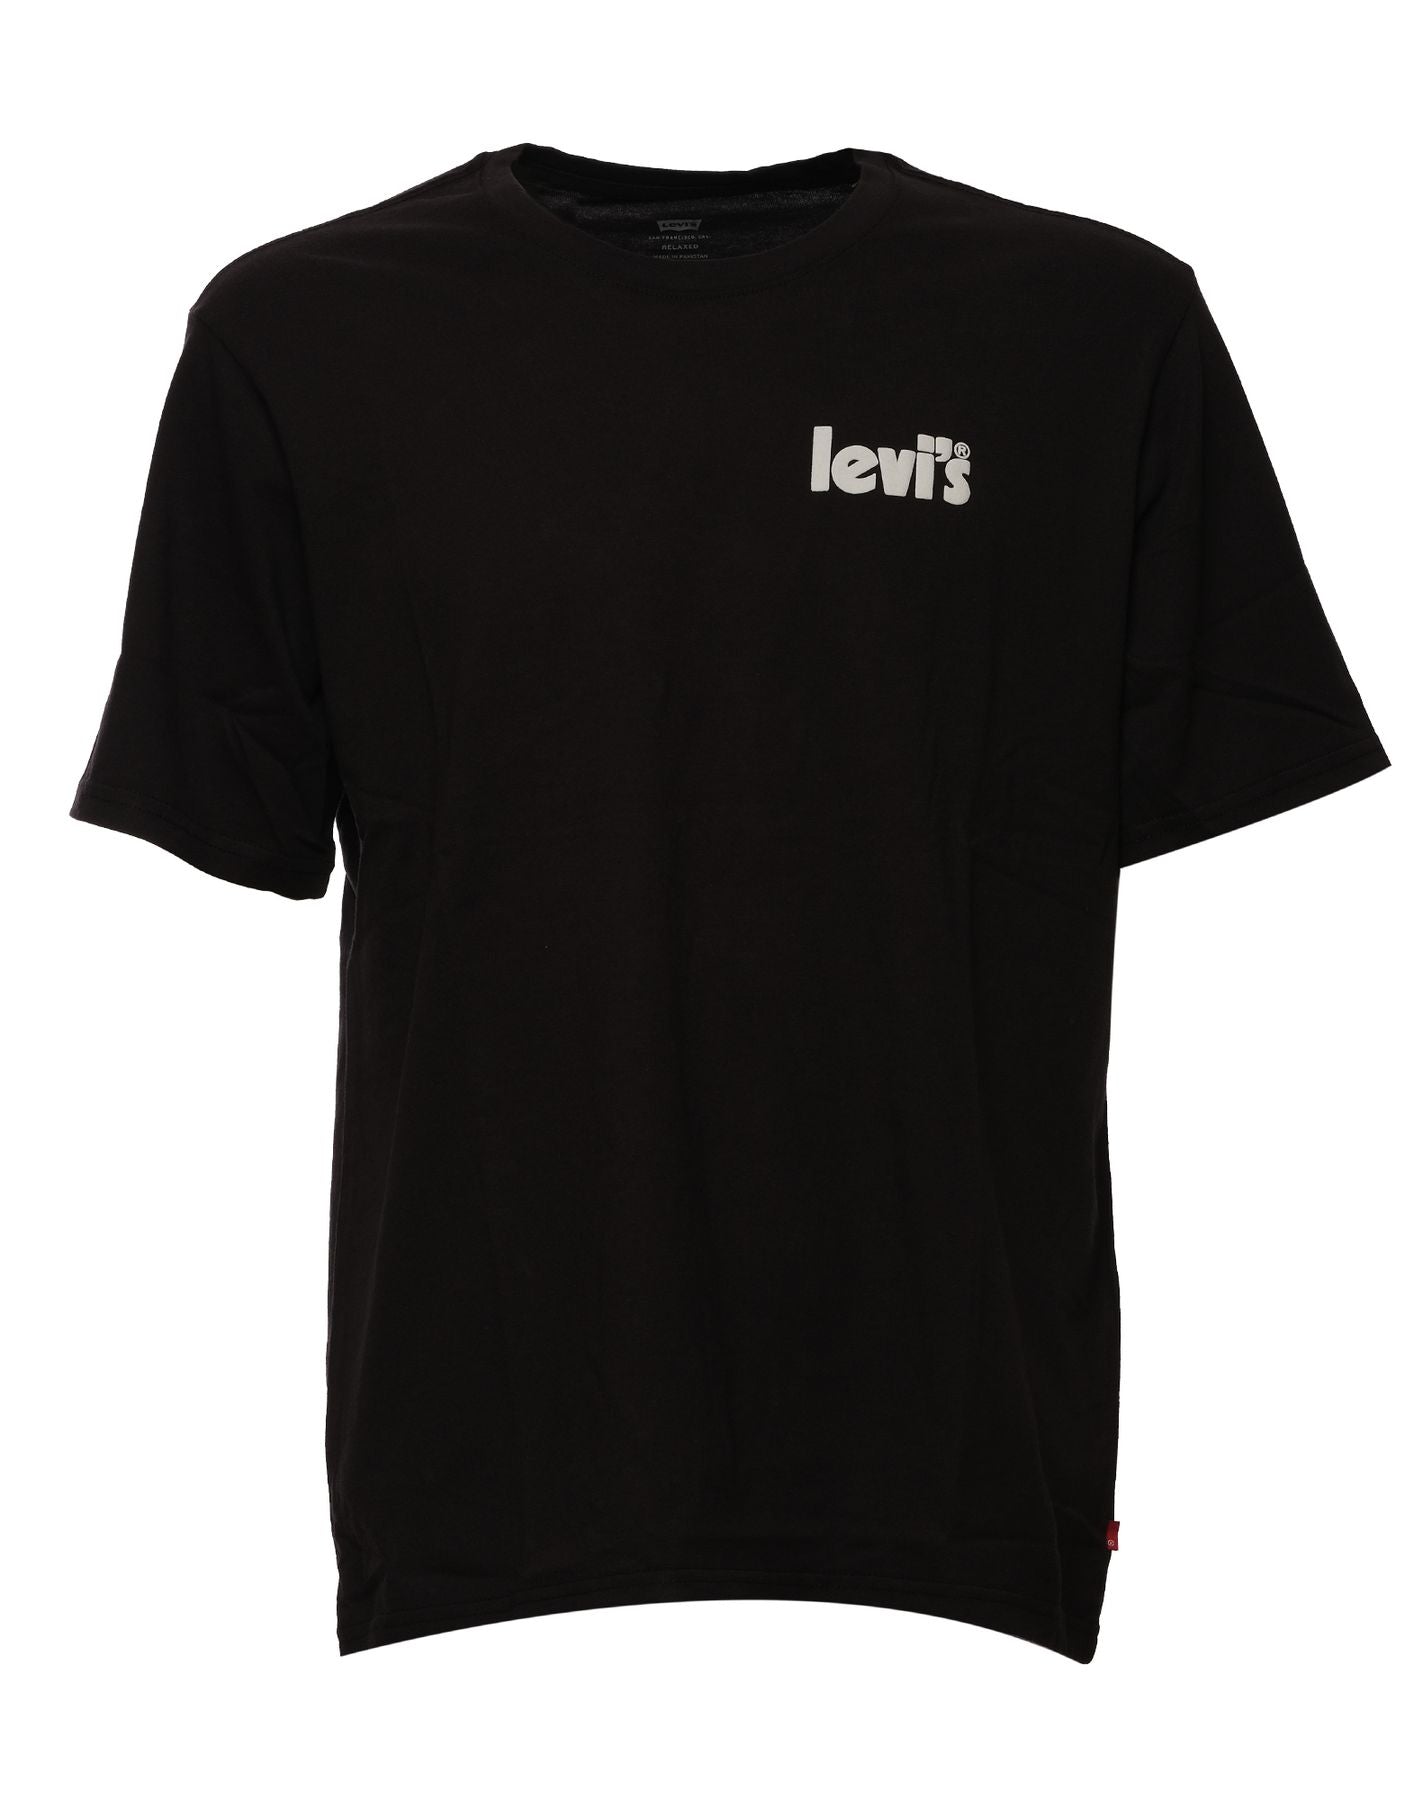 T-Shirt für Männer 16143 0837 CAVIAR Levi's